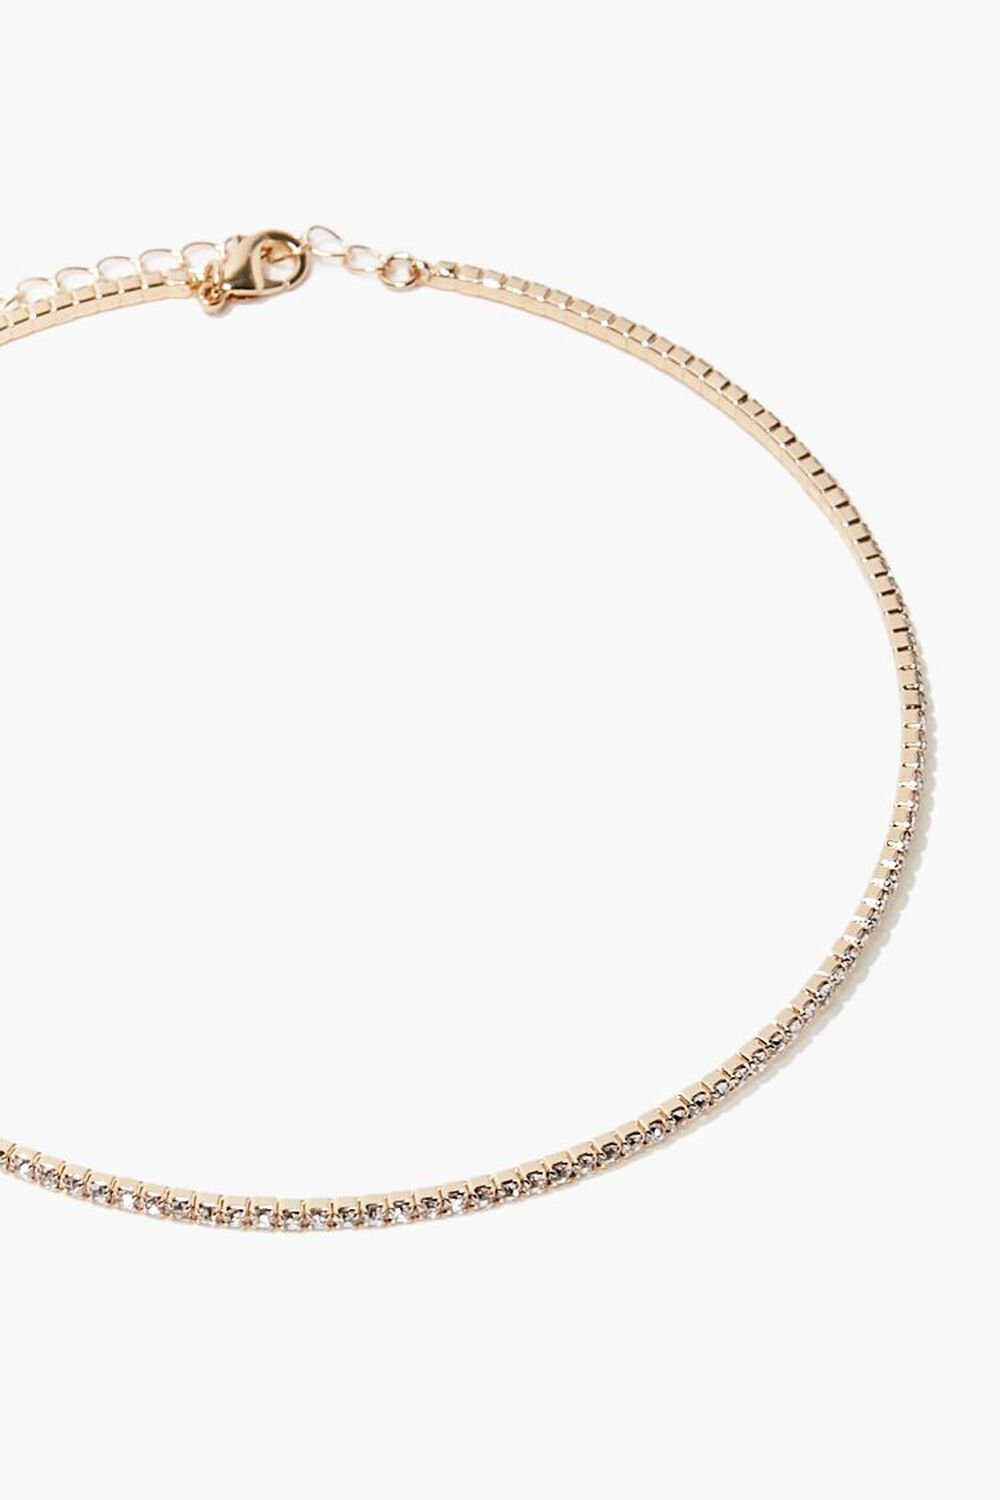 GOLD Box Chain Choker Necklace, image 1